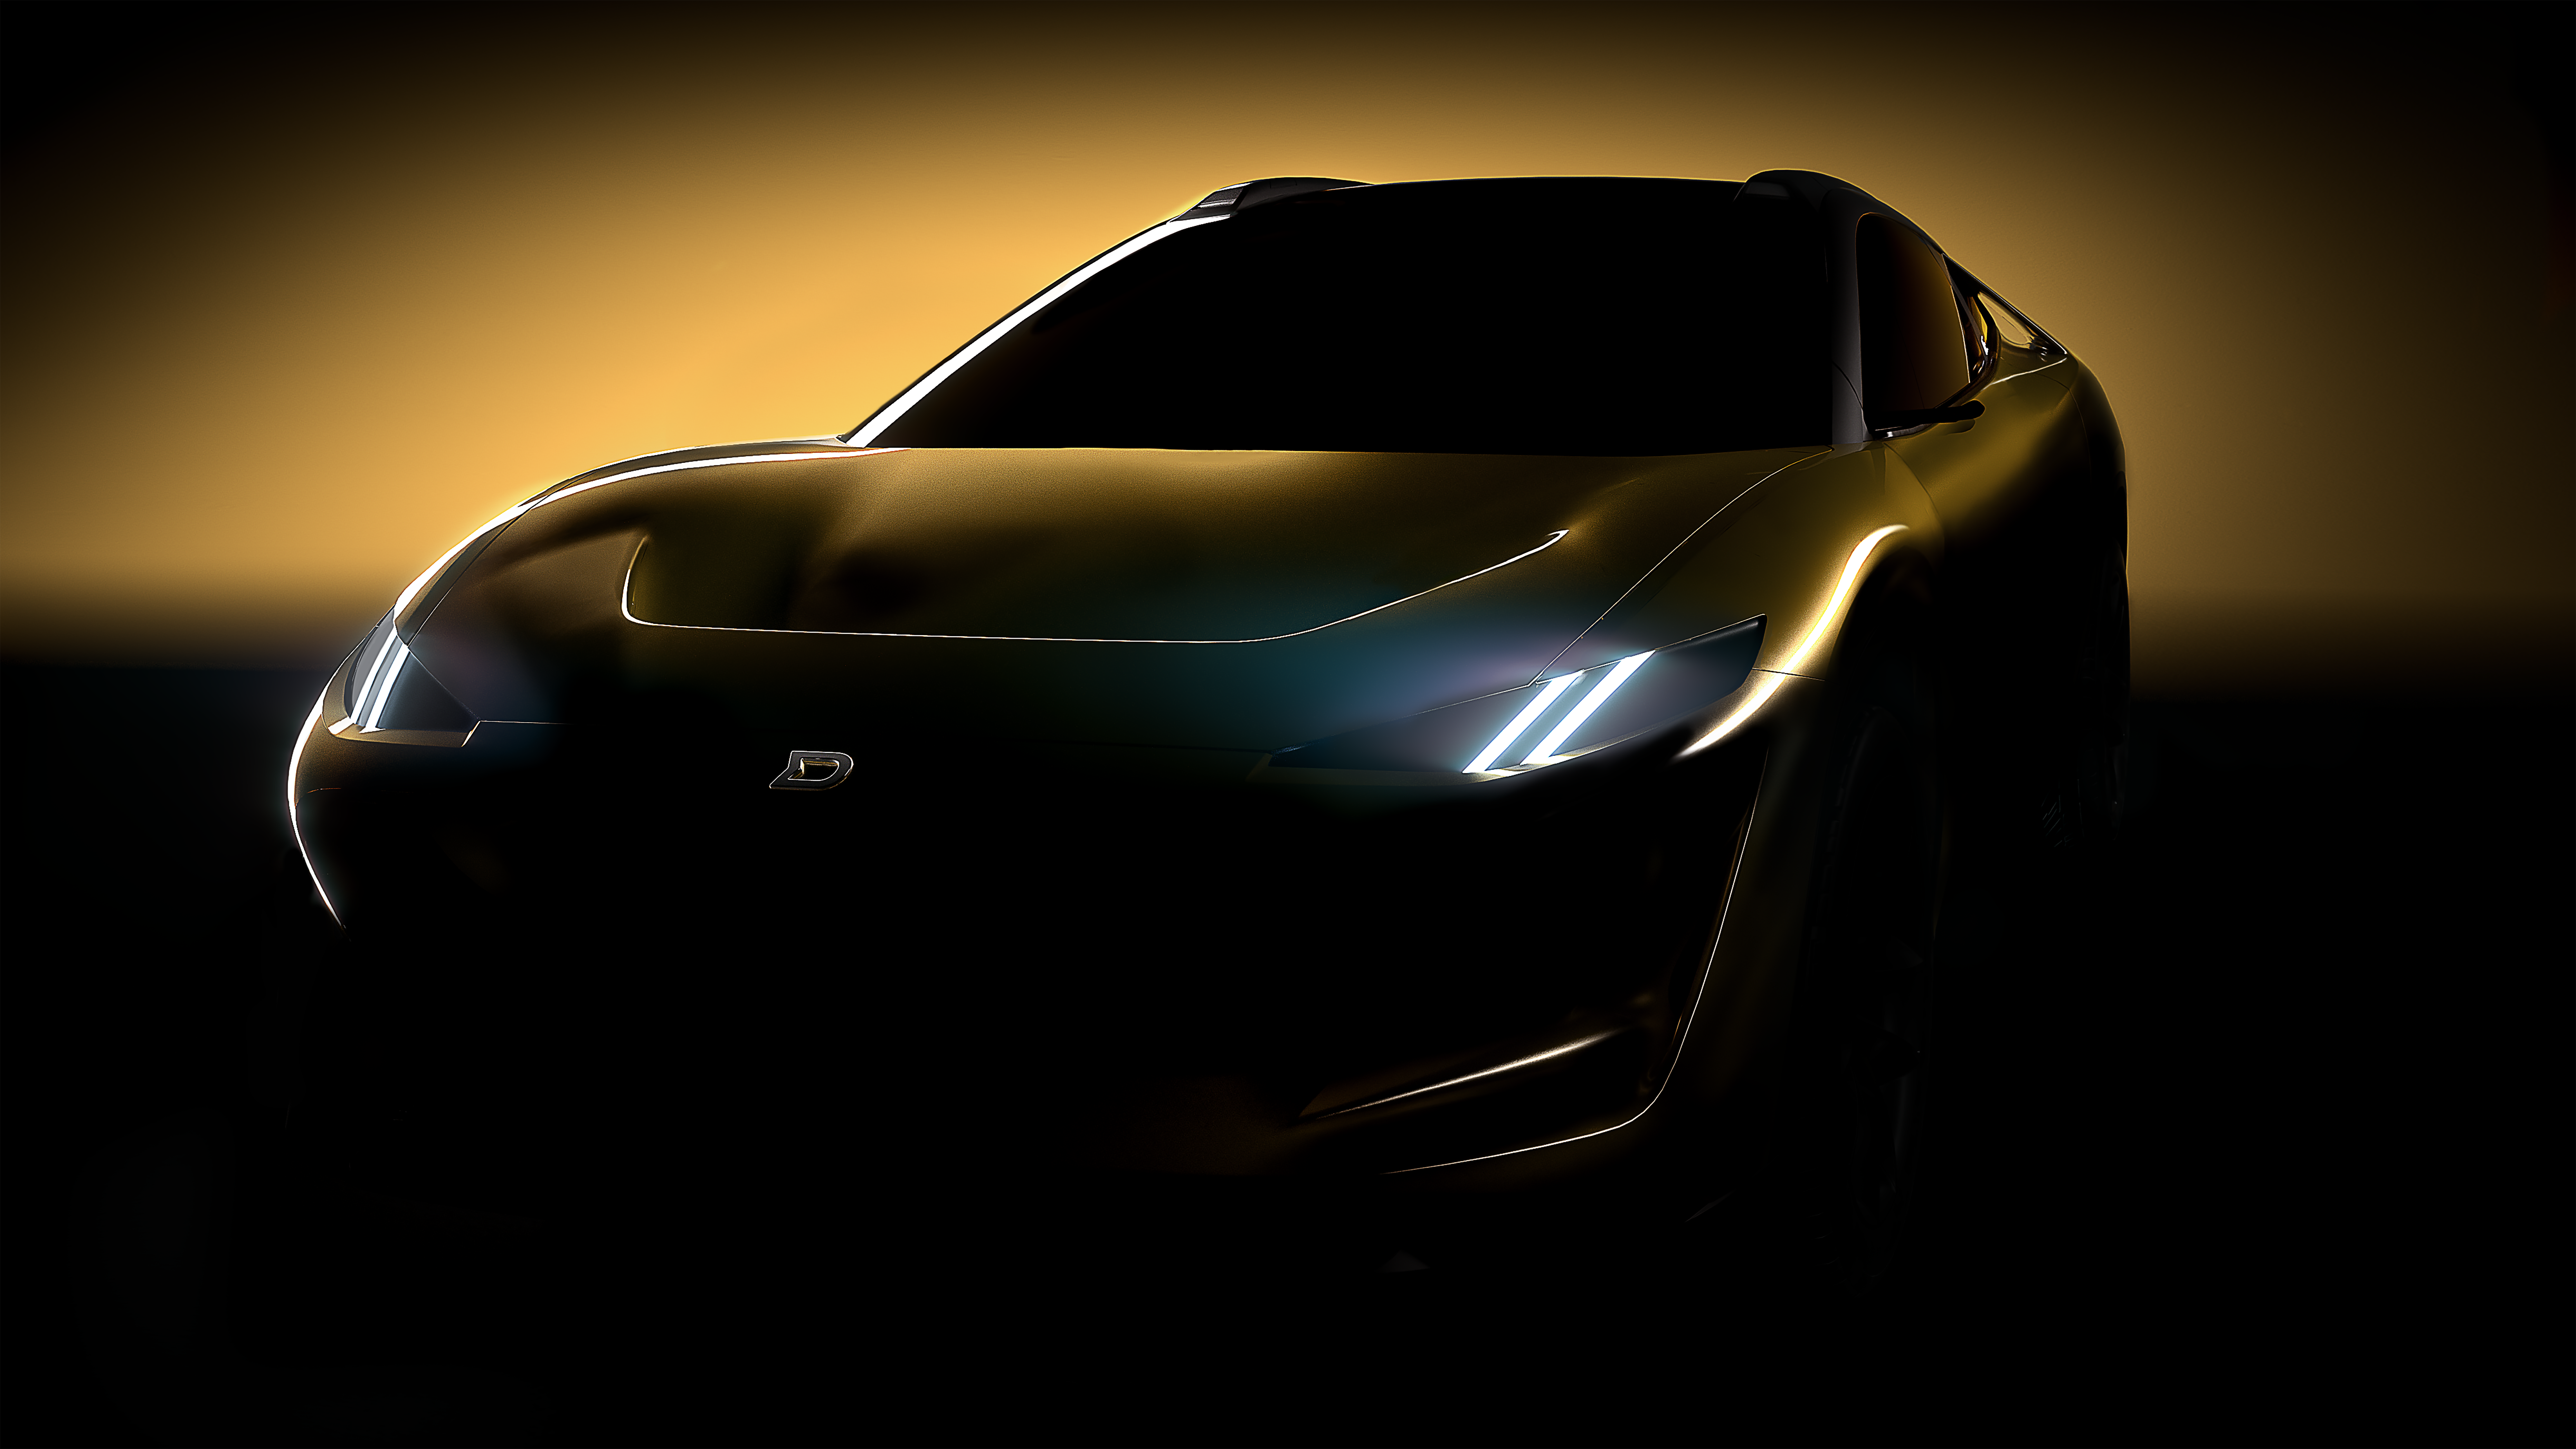 Drako Dragon: A new 1.9-sec 0-60 mph electric hypercar in a luxury SUV format